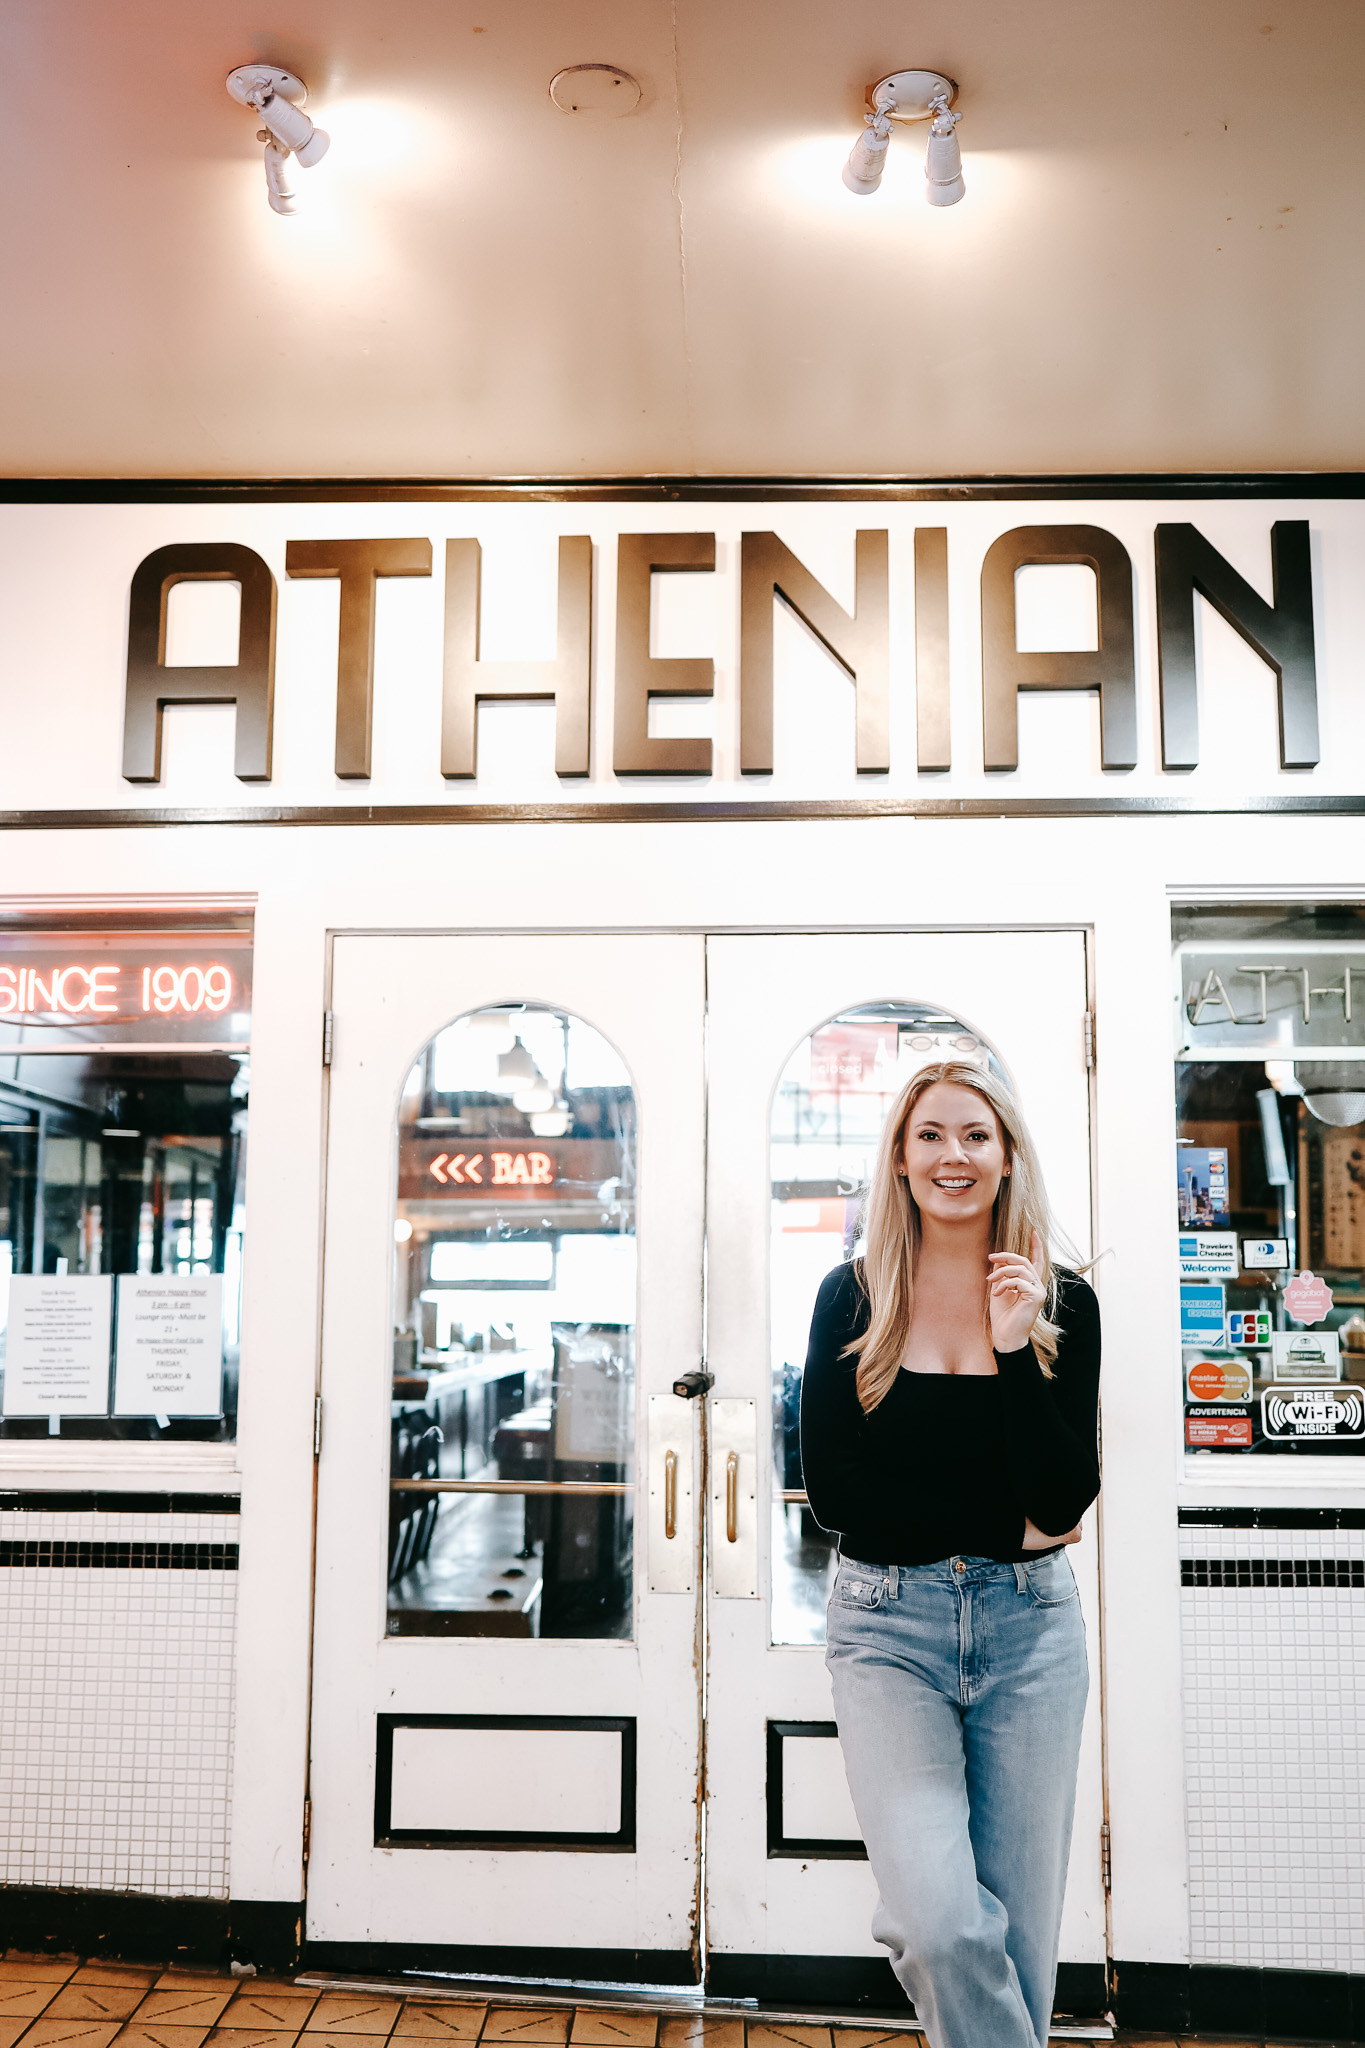 Athenian Seafood Restaurant and Bar